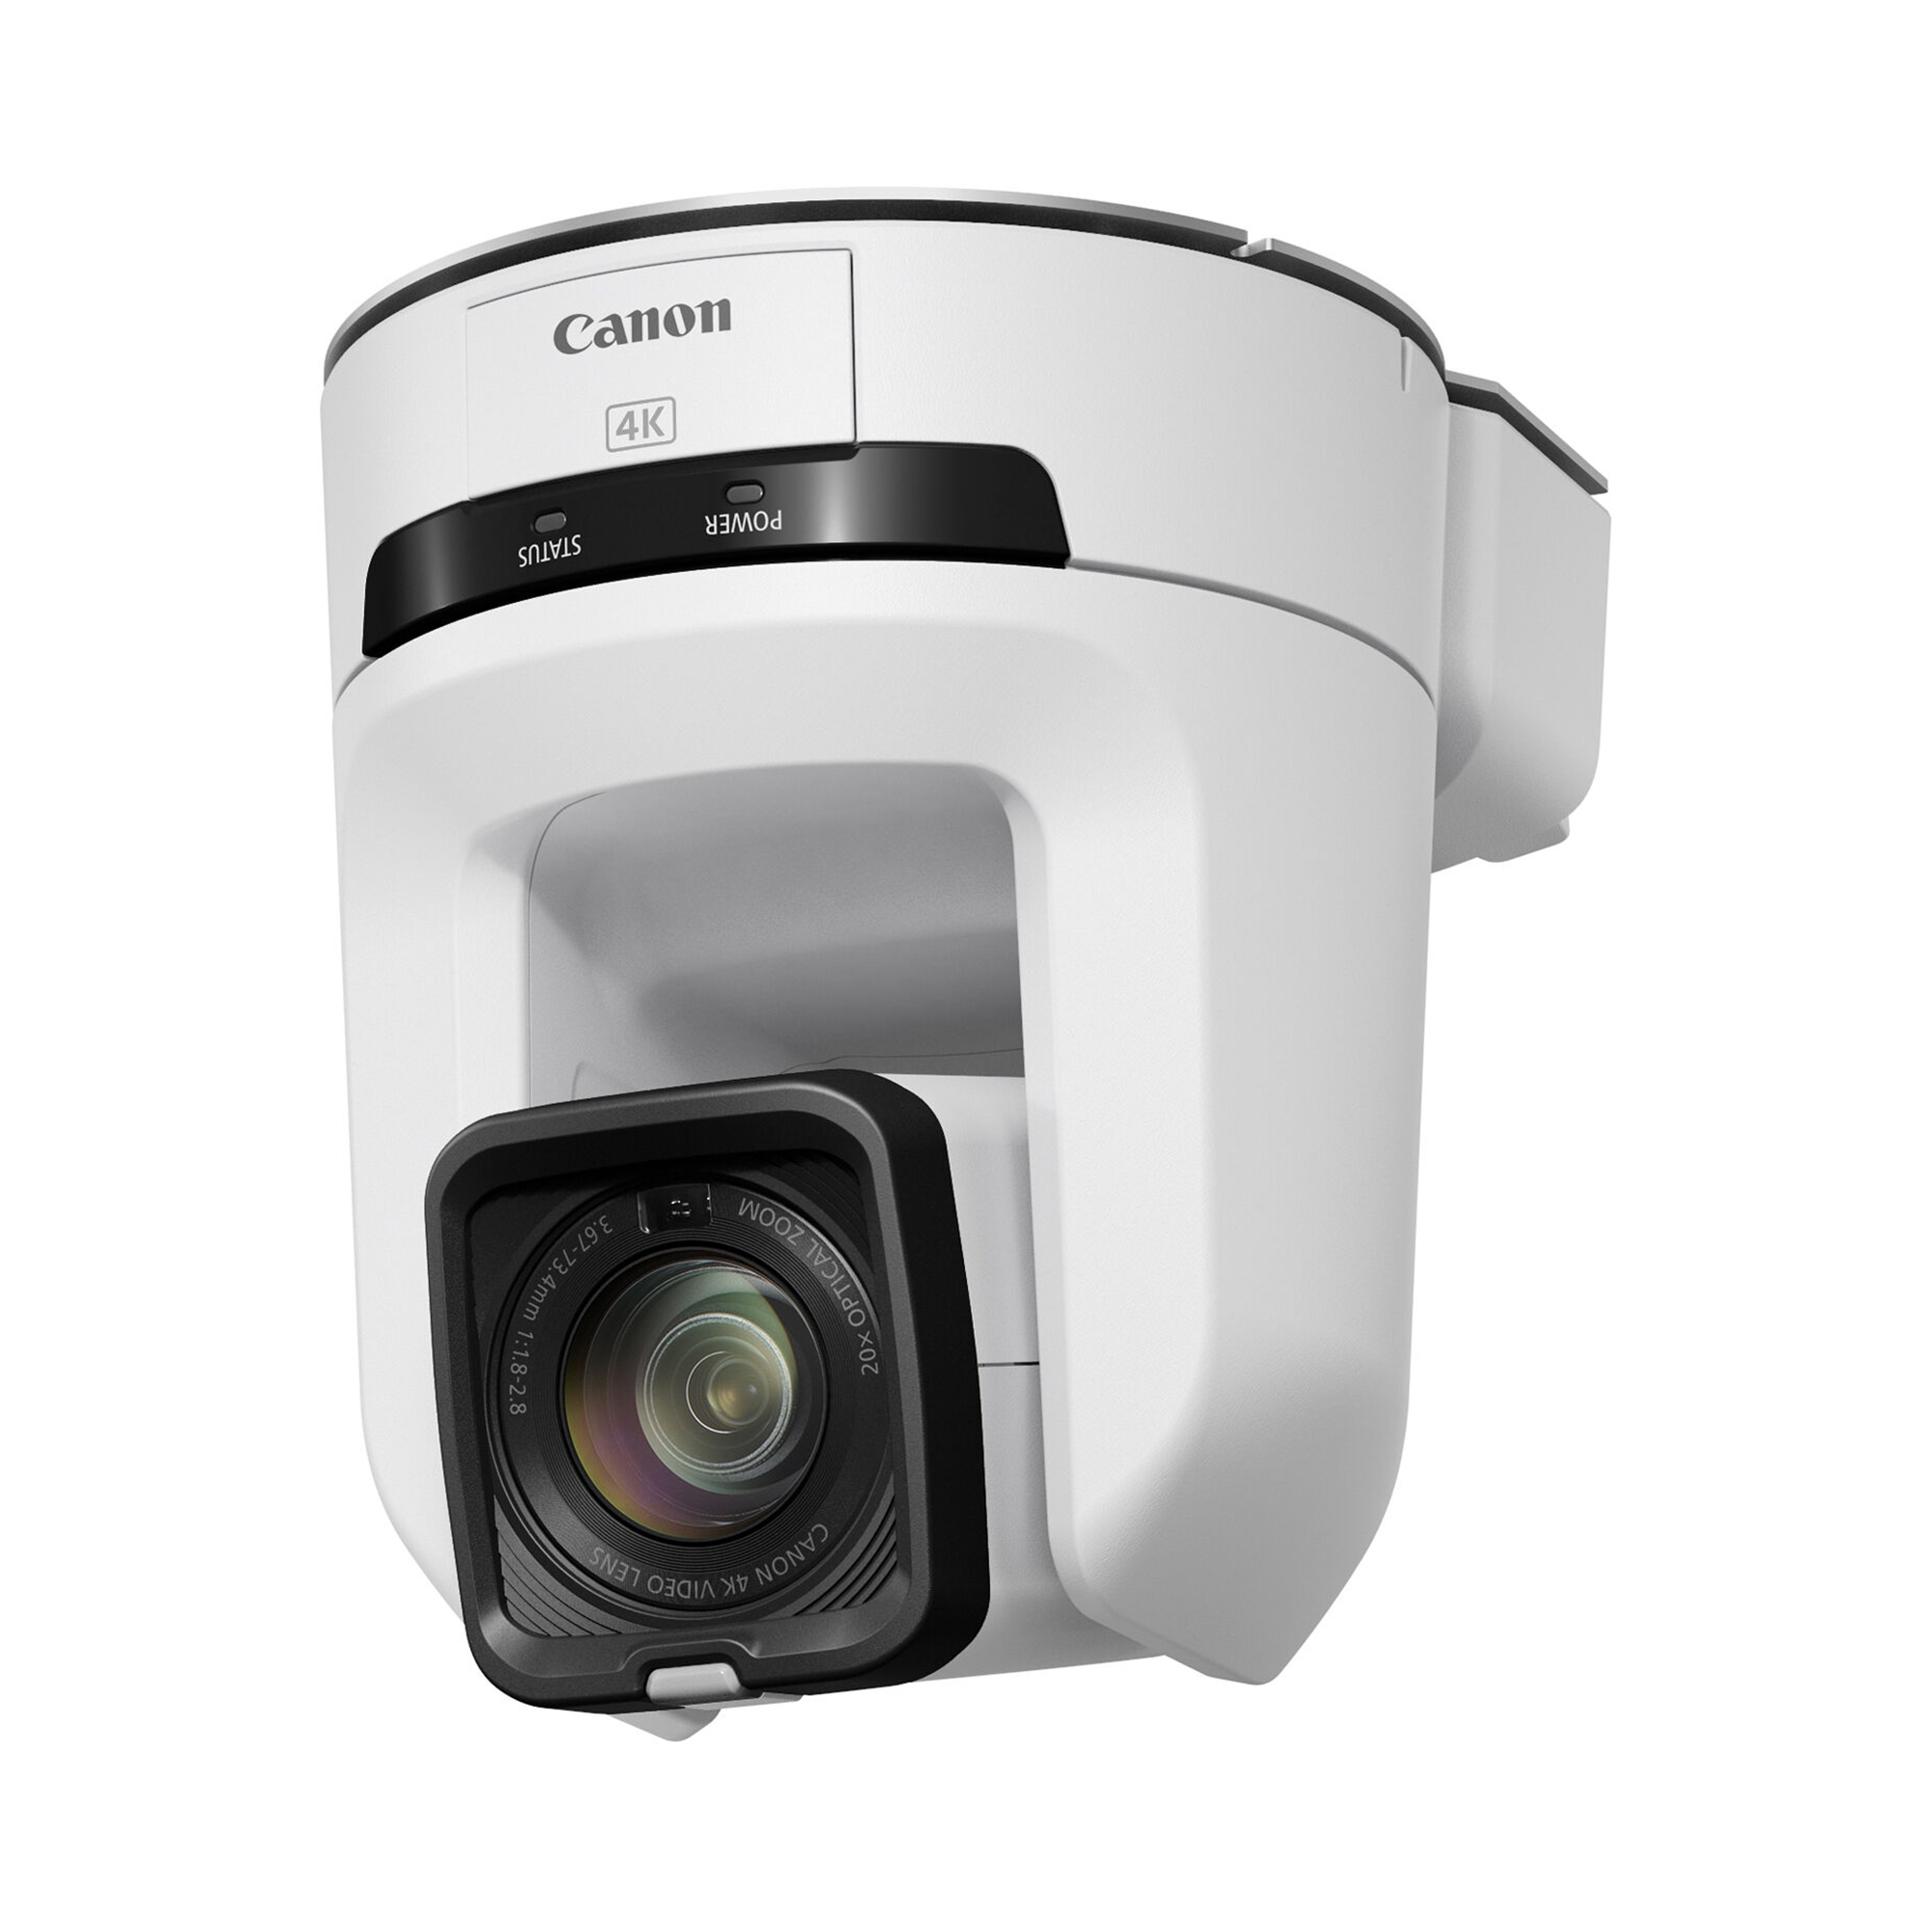 Canon CR-N300 4K NDI PTZ 20x Camera with Auto-Tracking (Titanium White)